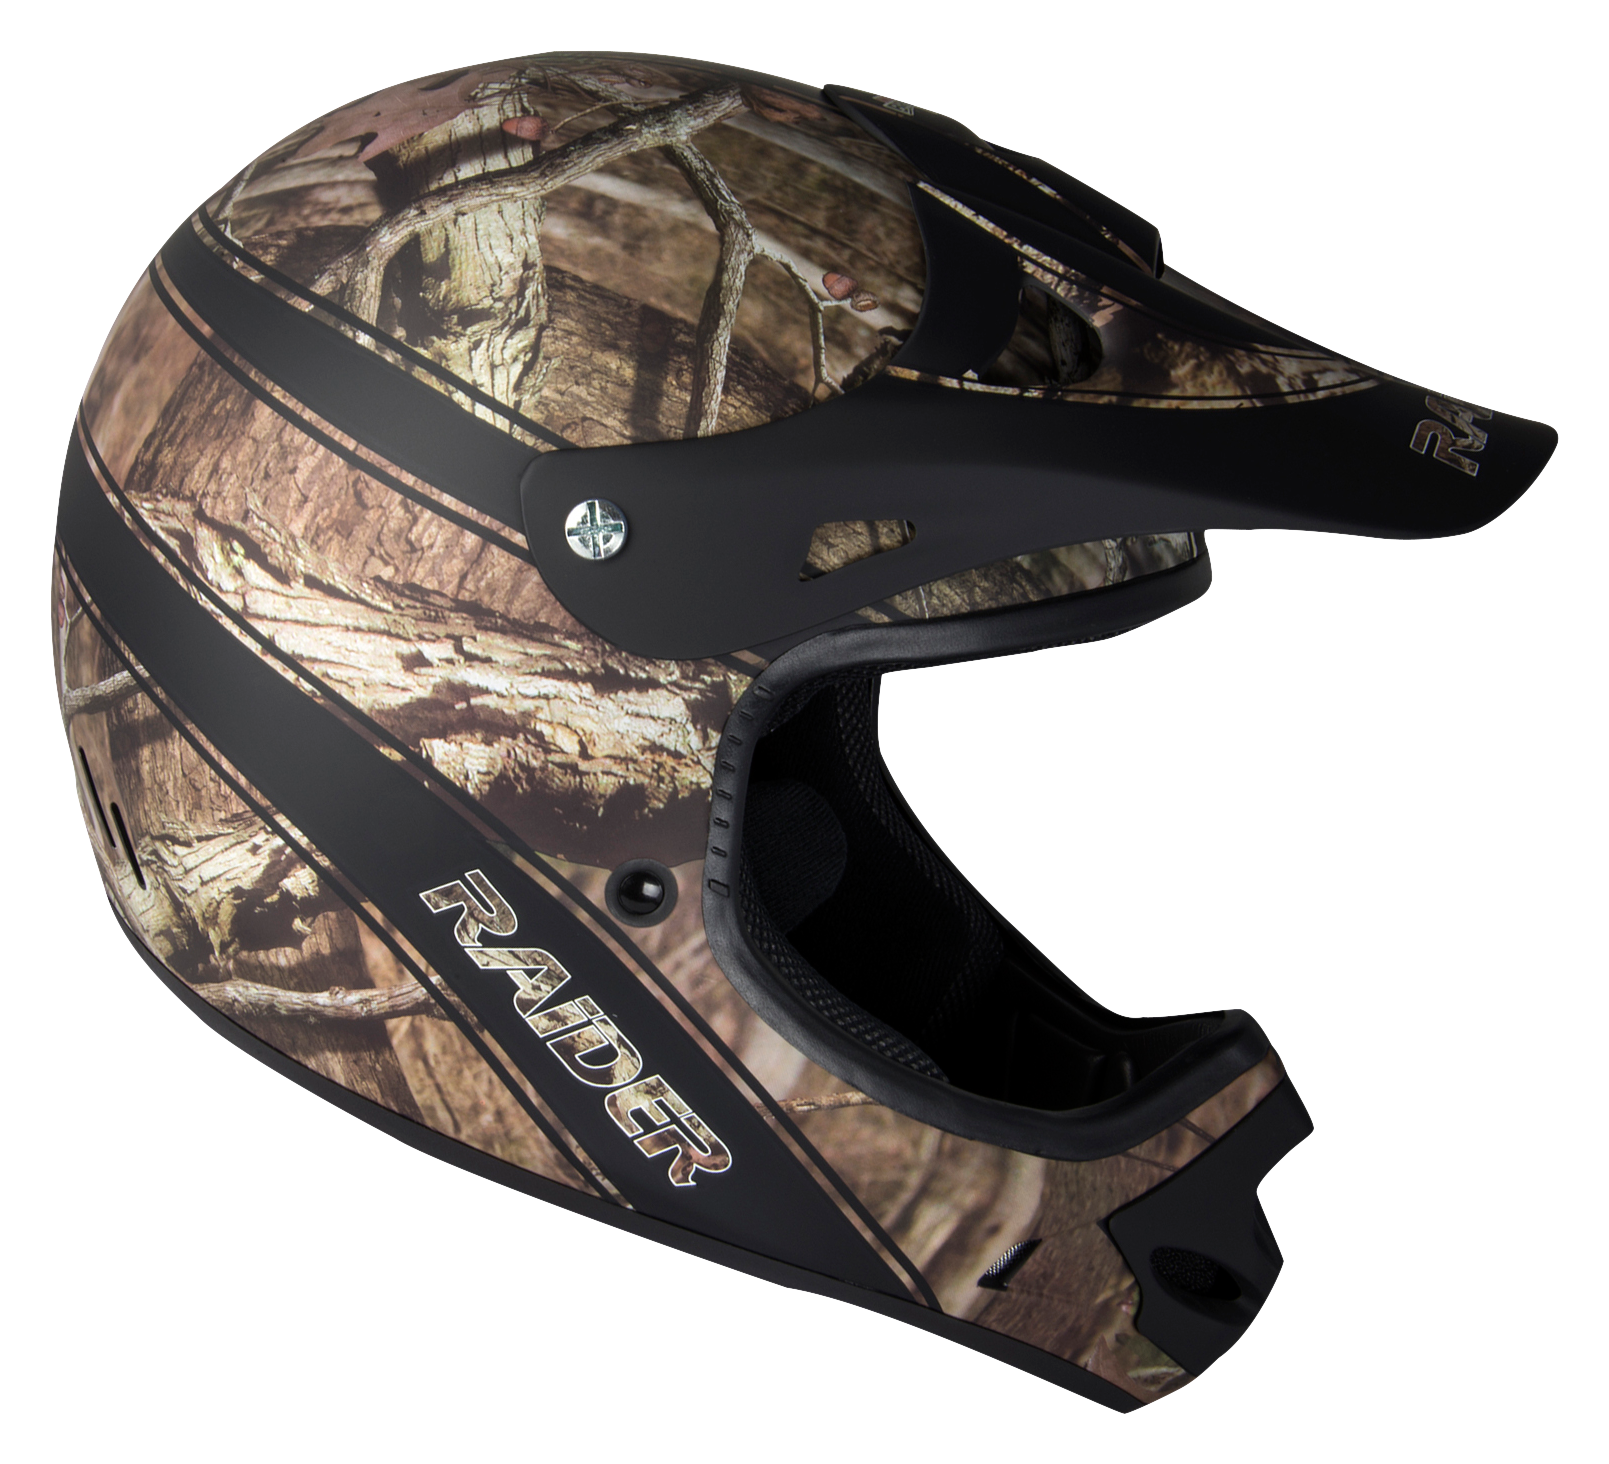 Raider Ambush MX Camo Helmet for Youth